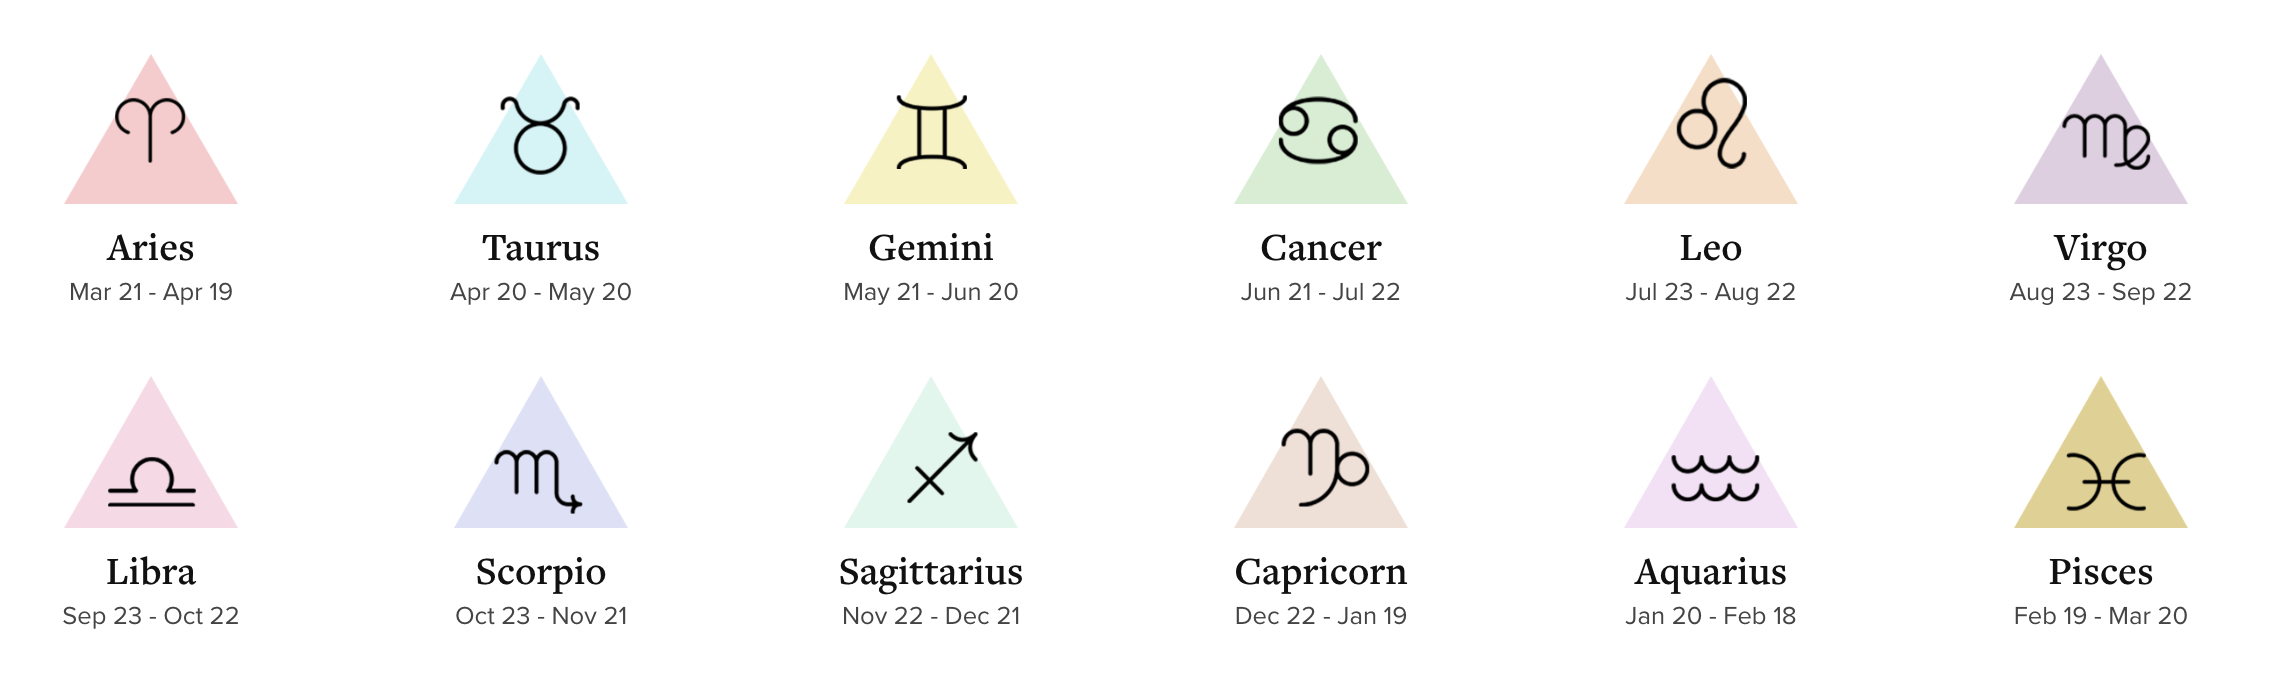 2018-Horoscopes-Entity-Chart - Entity inside Entity Chart